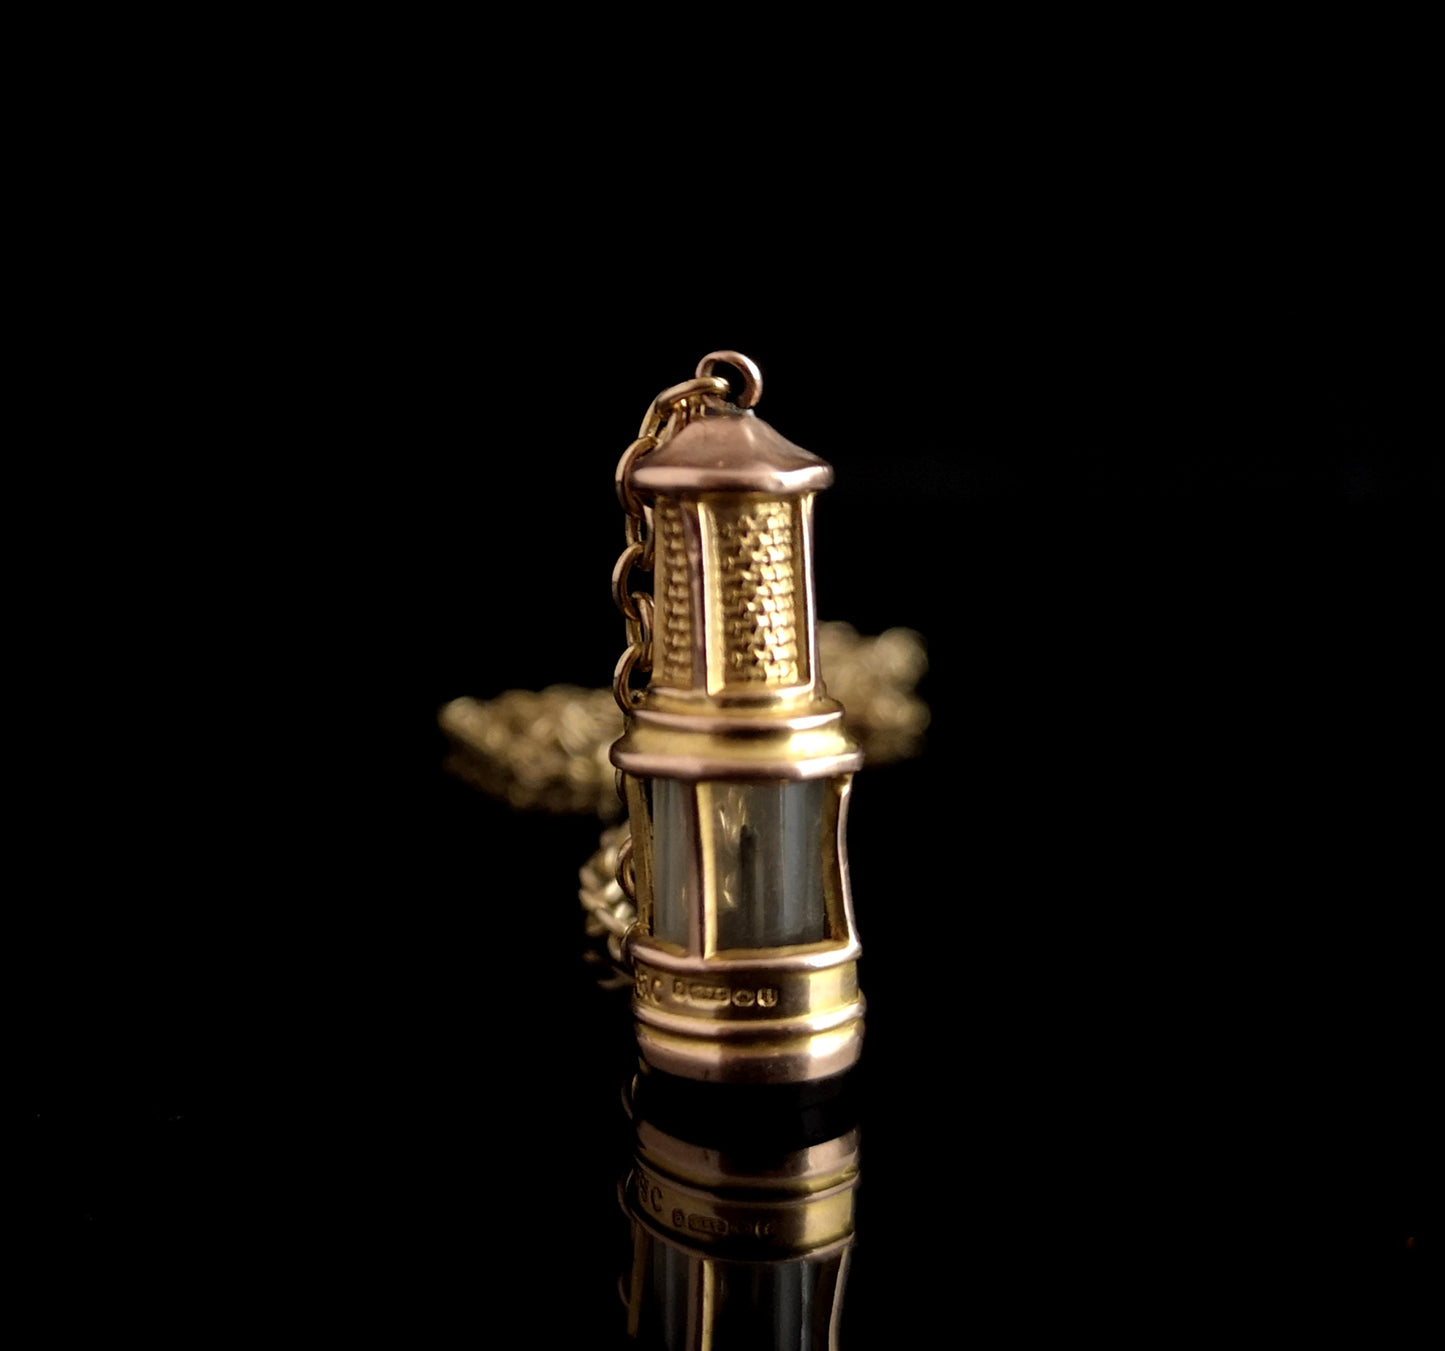 Antique gold lamp pendant, gold chain necklace, 9ct